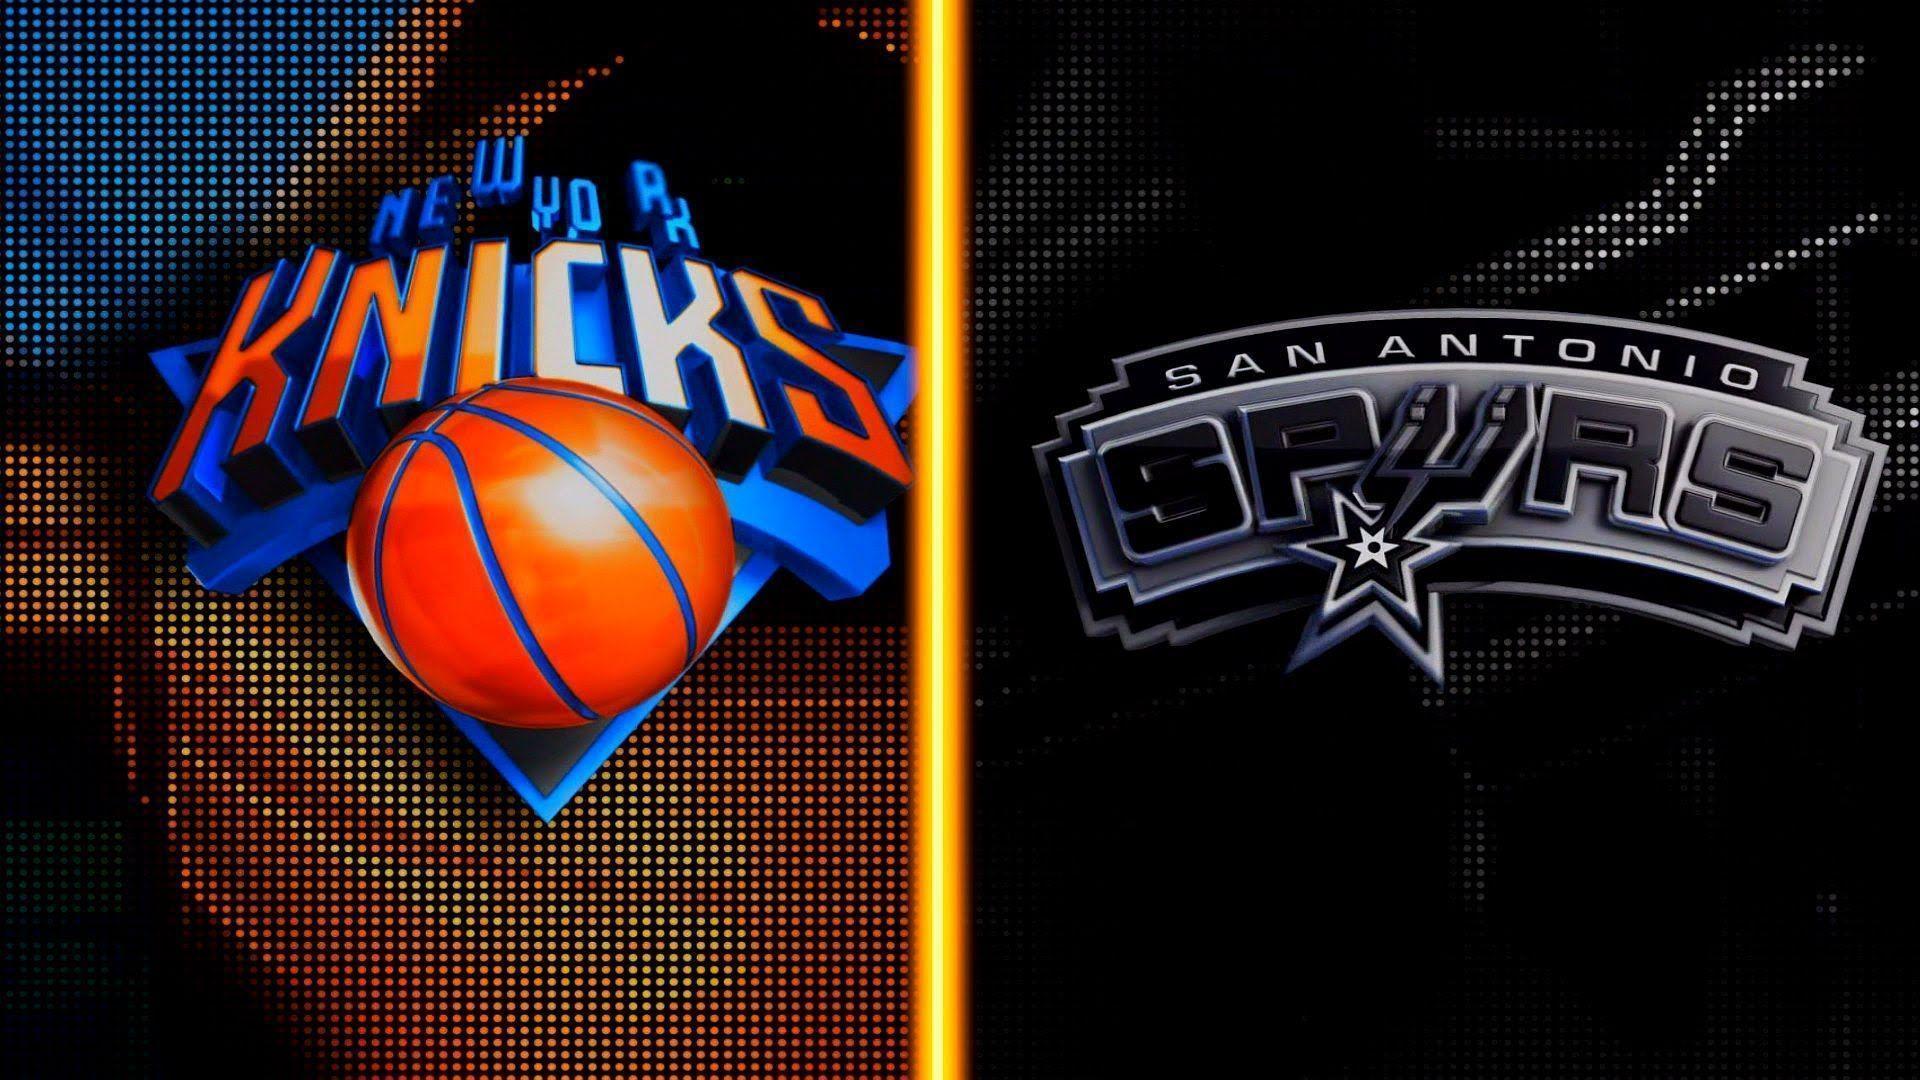 PS4: NBA 2K16 York Knicks vs. San Antonio Spurs 1080p 60